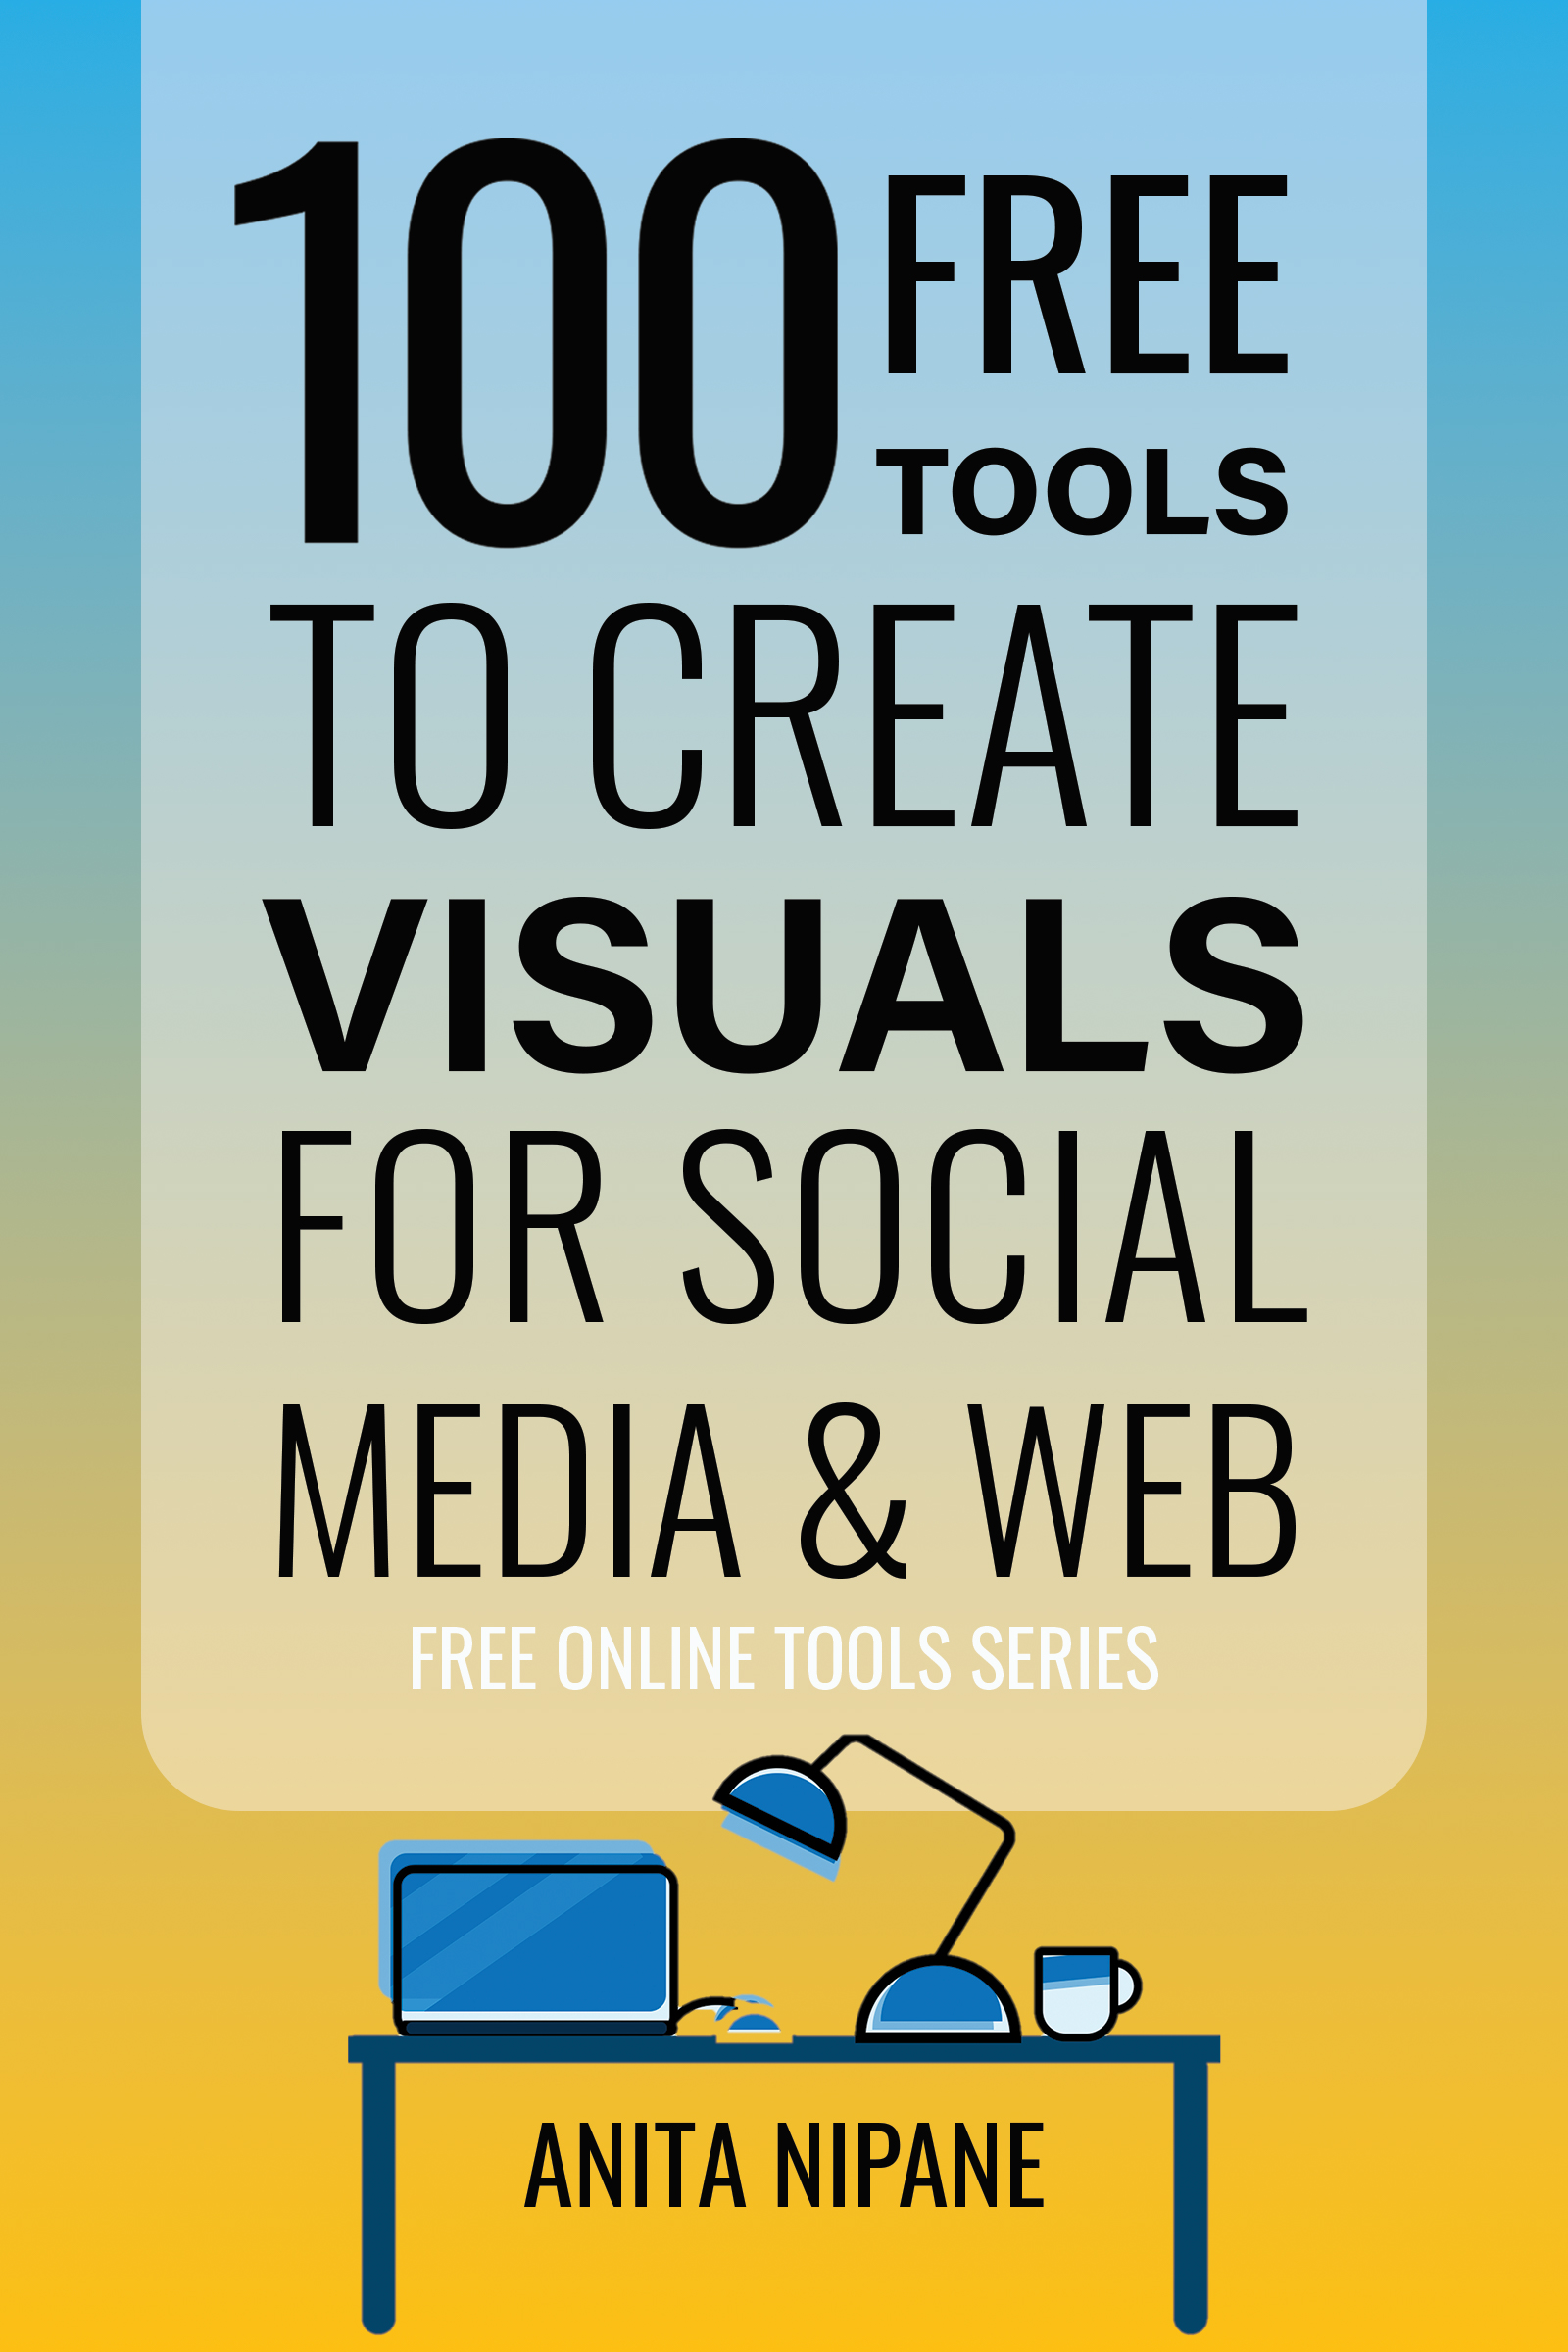 FREE: 100+ Free Tools to Create Visuals for Web & Social Media by Anita Nipane